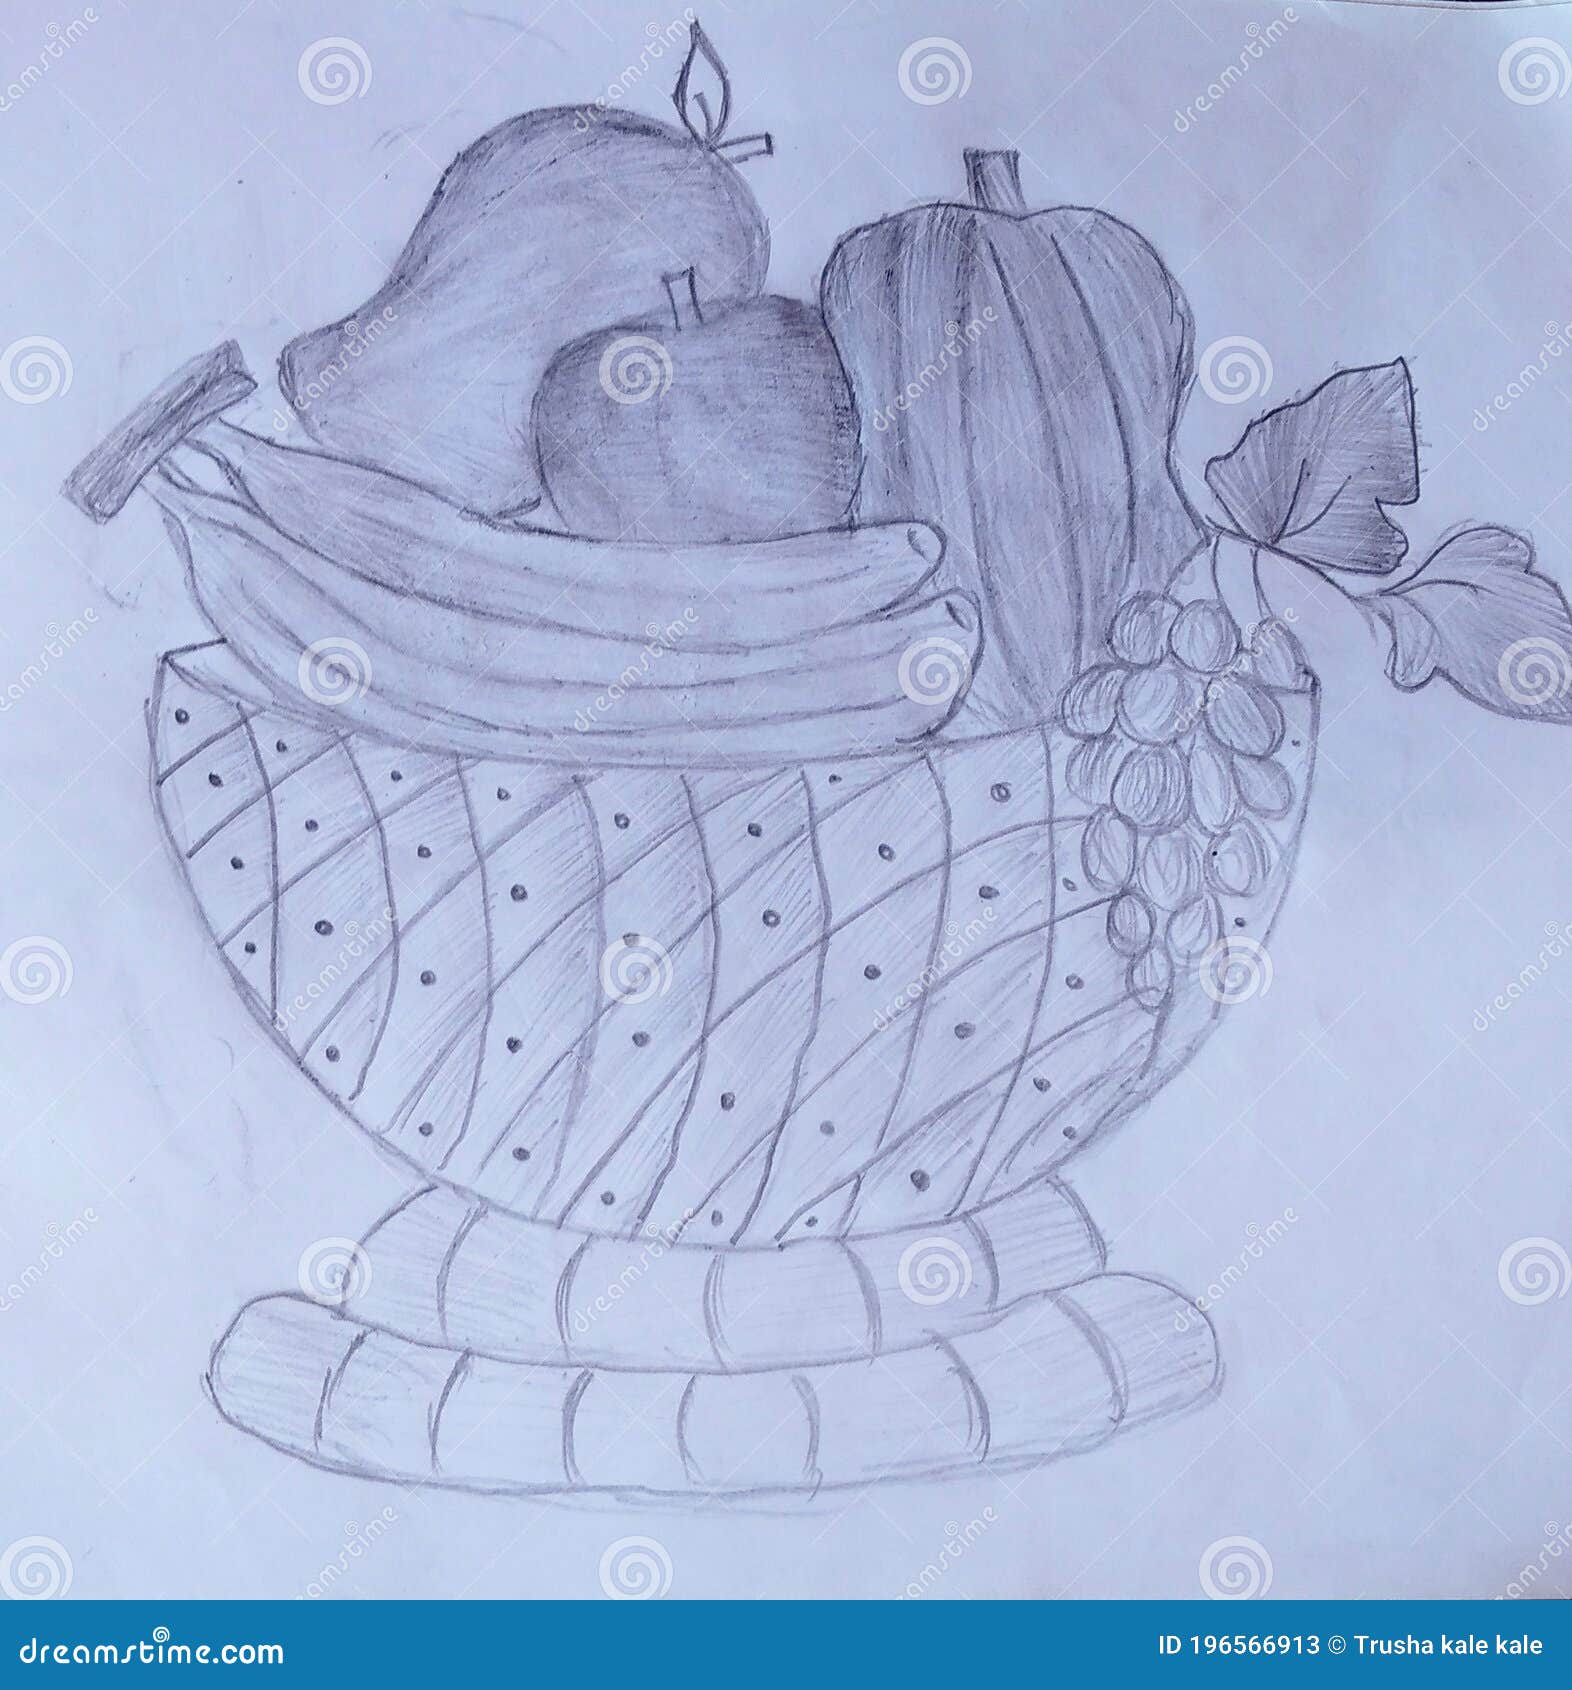 How to draw a fruit basket step by step - YouTube-saigonsouth.com.vn